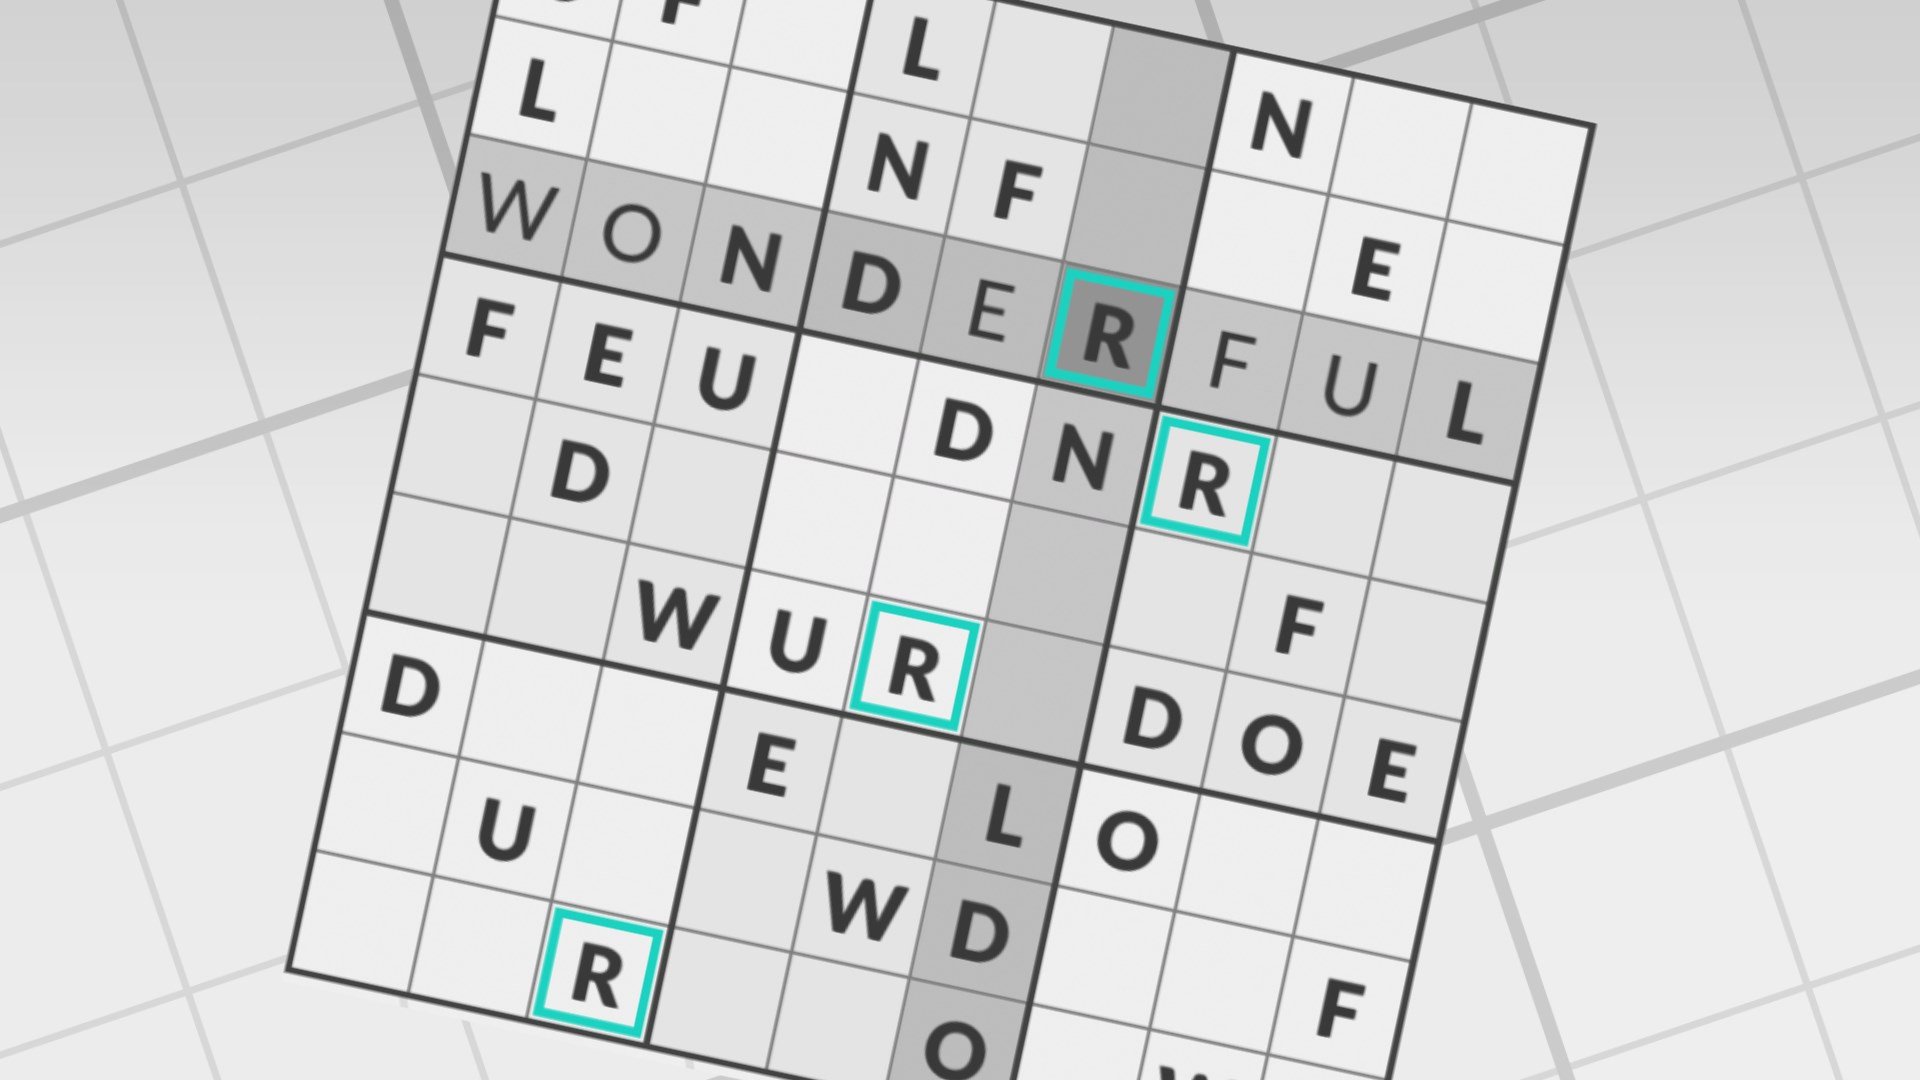 Word Sudoku by POWGI cover image